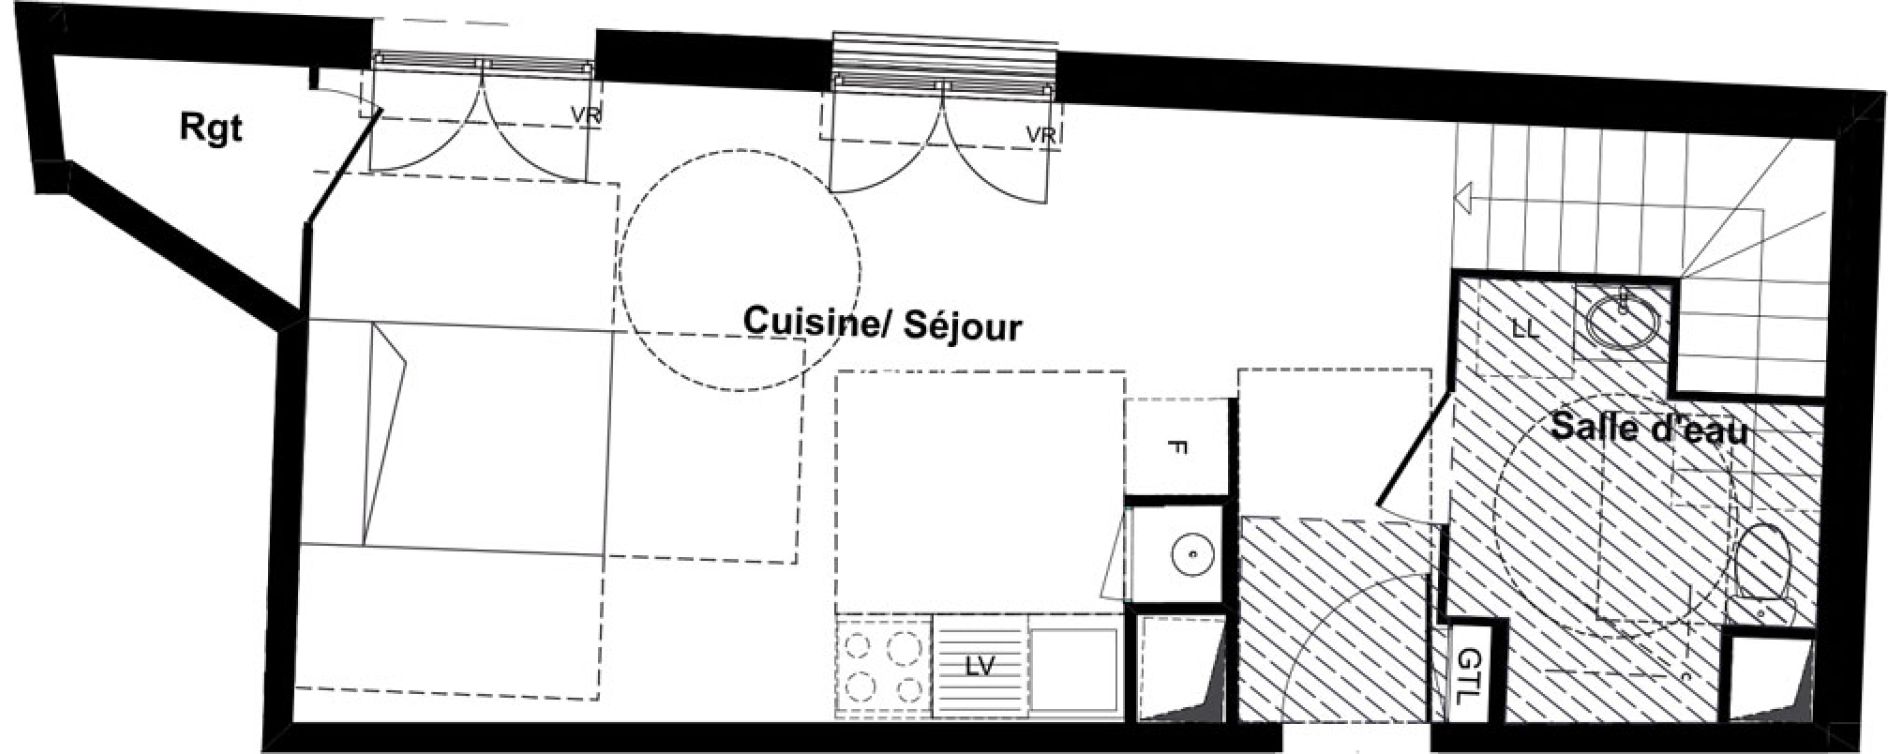 Souplex T4 de 81,89 m2 &agrave; Herblay Herblay sur seine centre ville